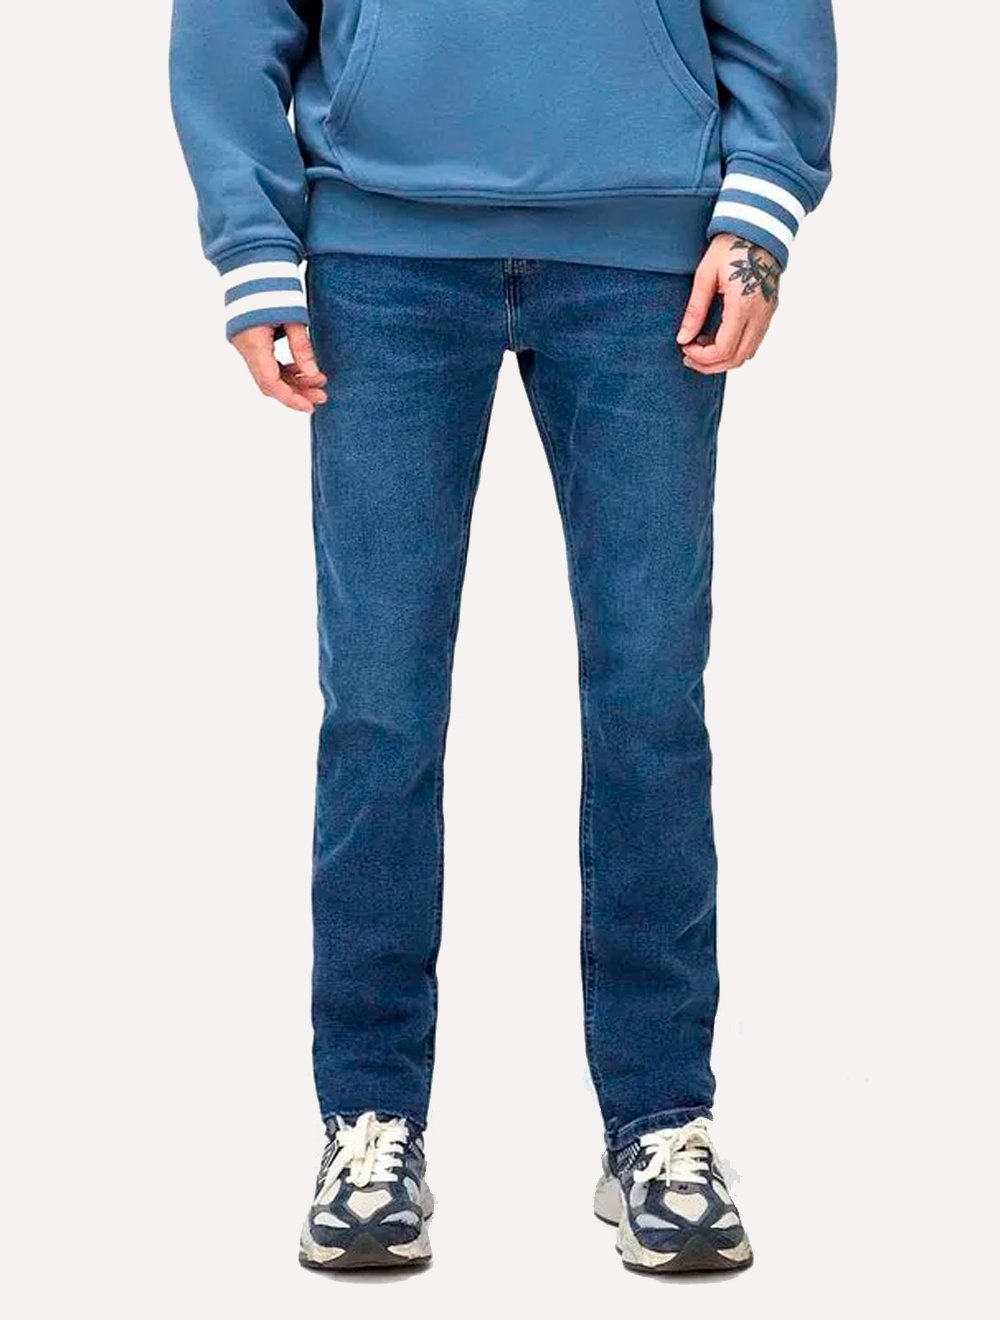 Calça Levis Jeans Masculina 510 Skinny Stretch Azul Médio